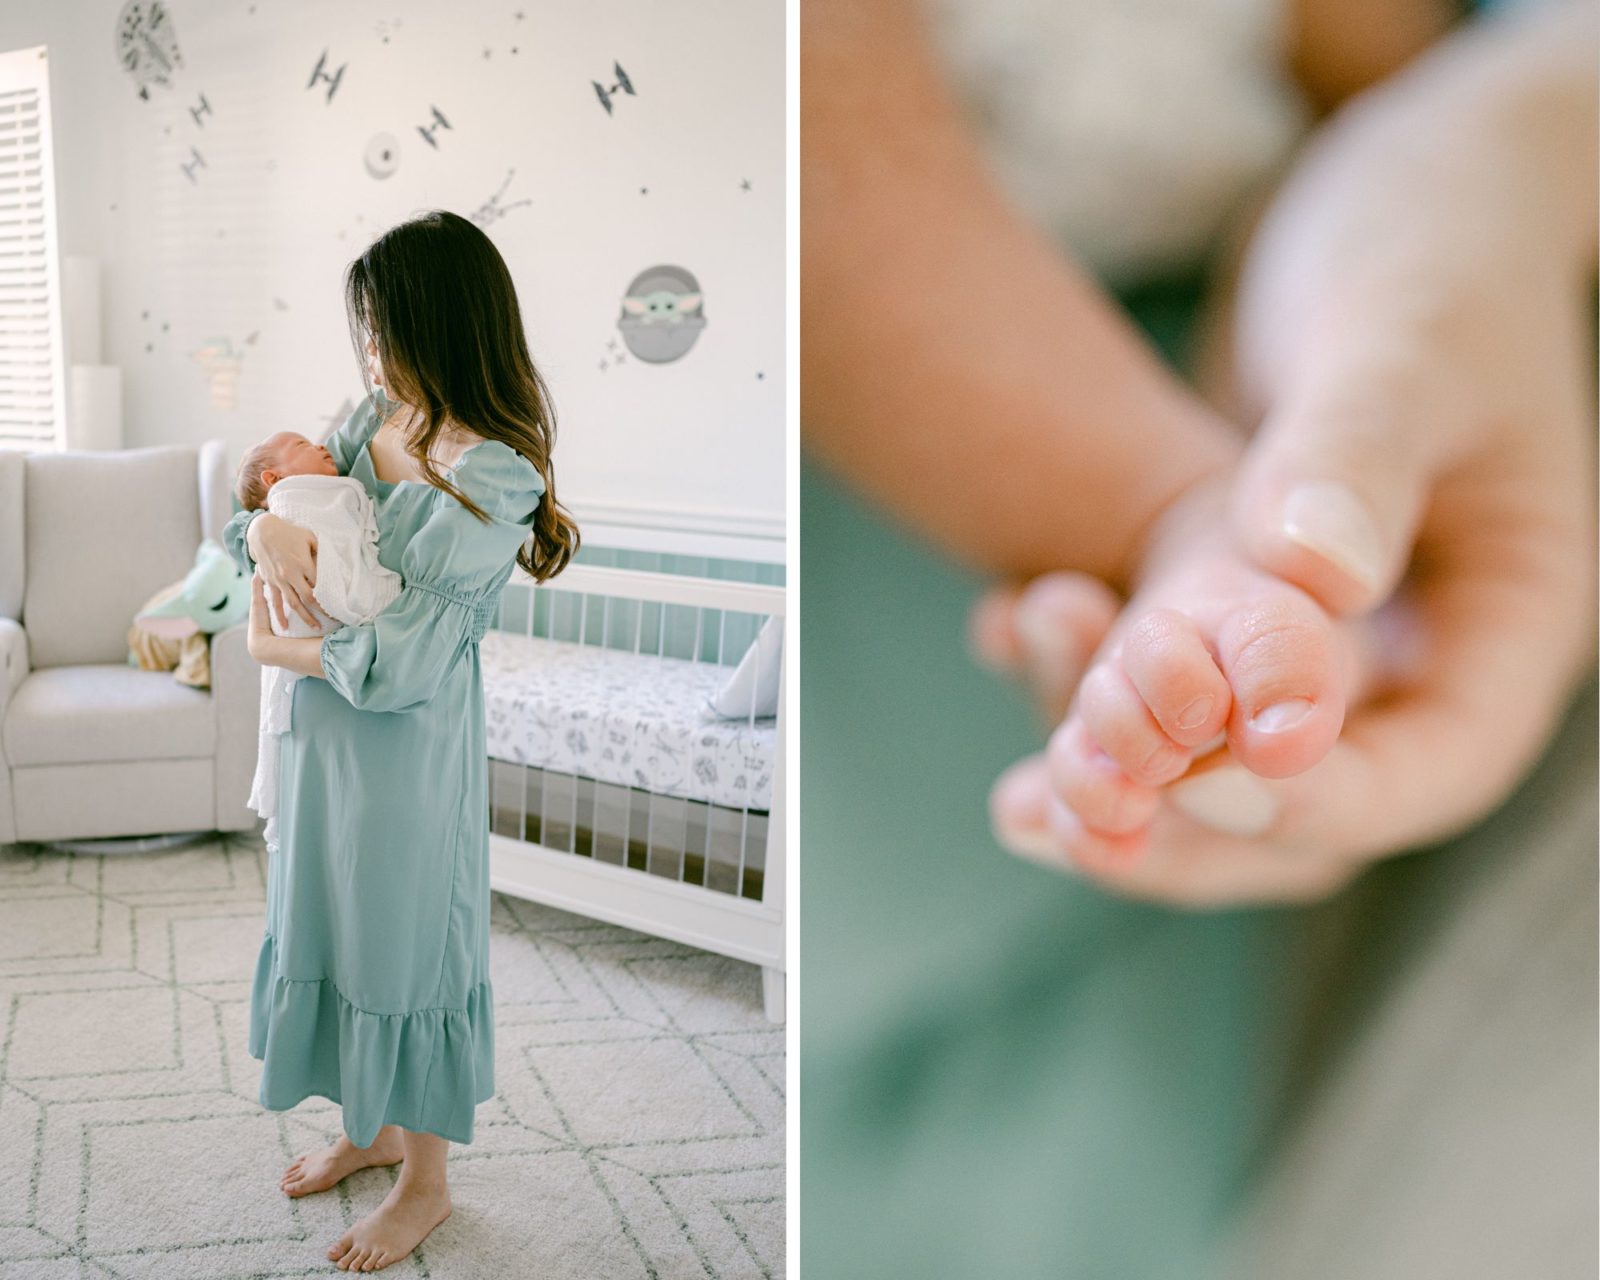 In home Newborn Photos showing feet details